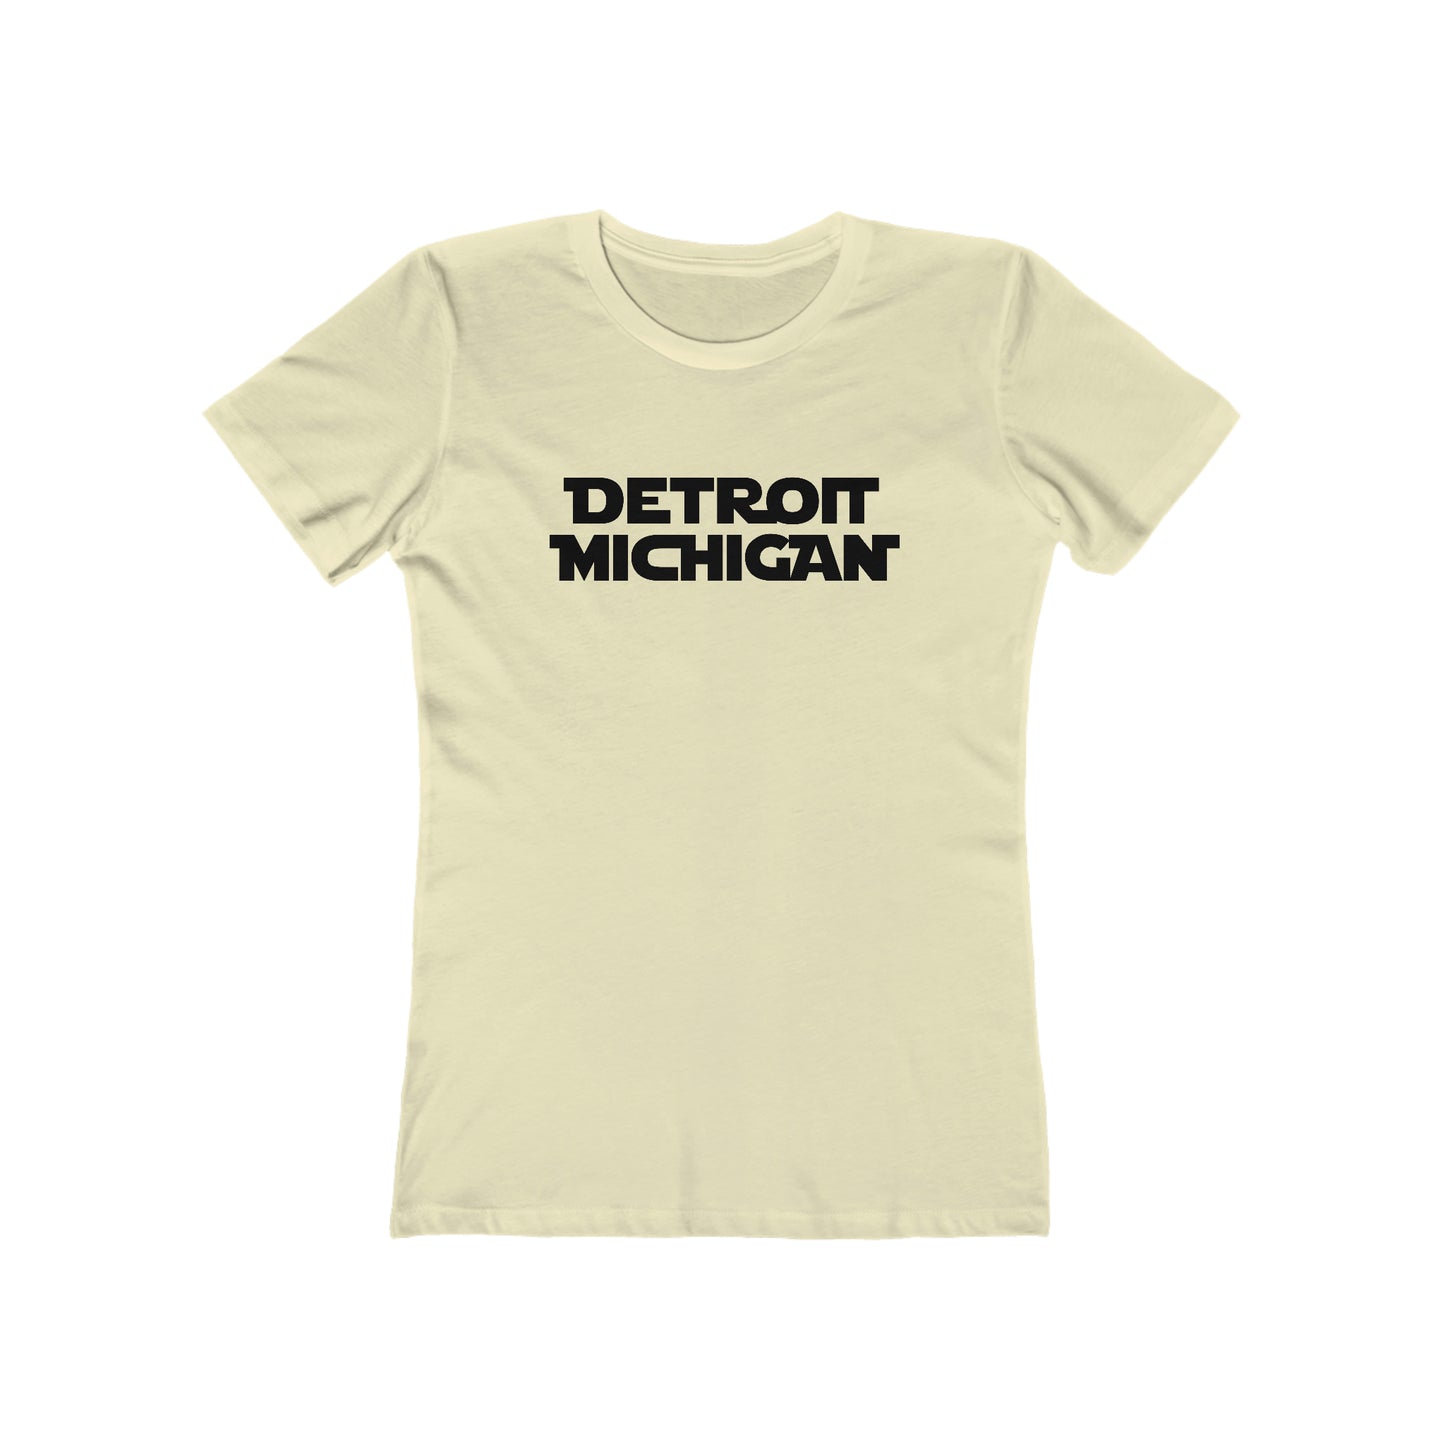 'Detroit Michigan'T-Shirt (1970s Epic Sci-Fi Parody) | Women's Boyfriend Cut